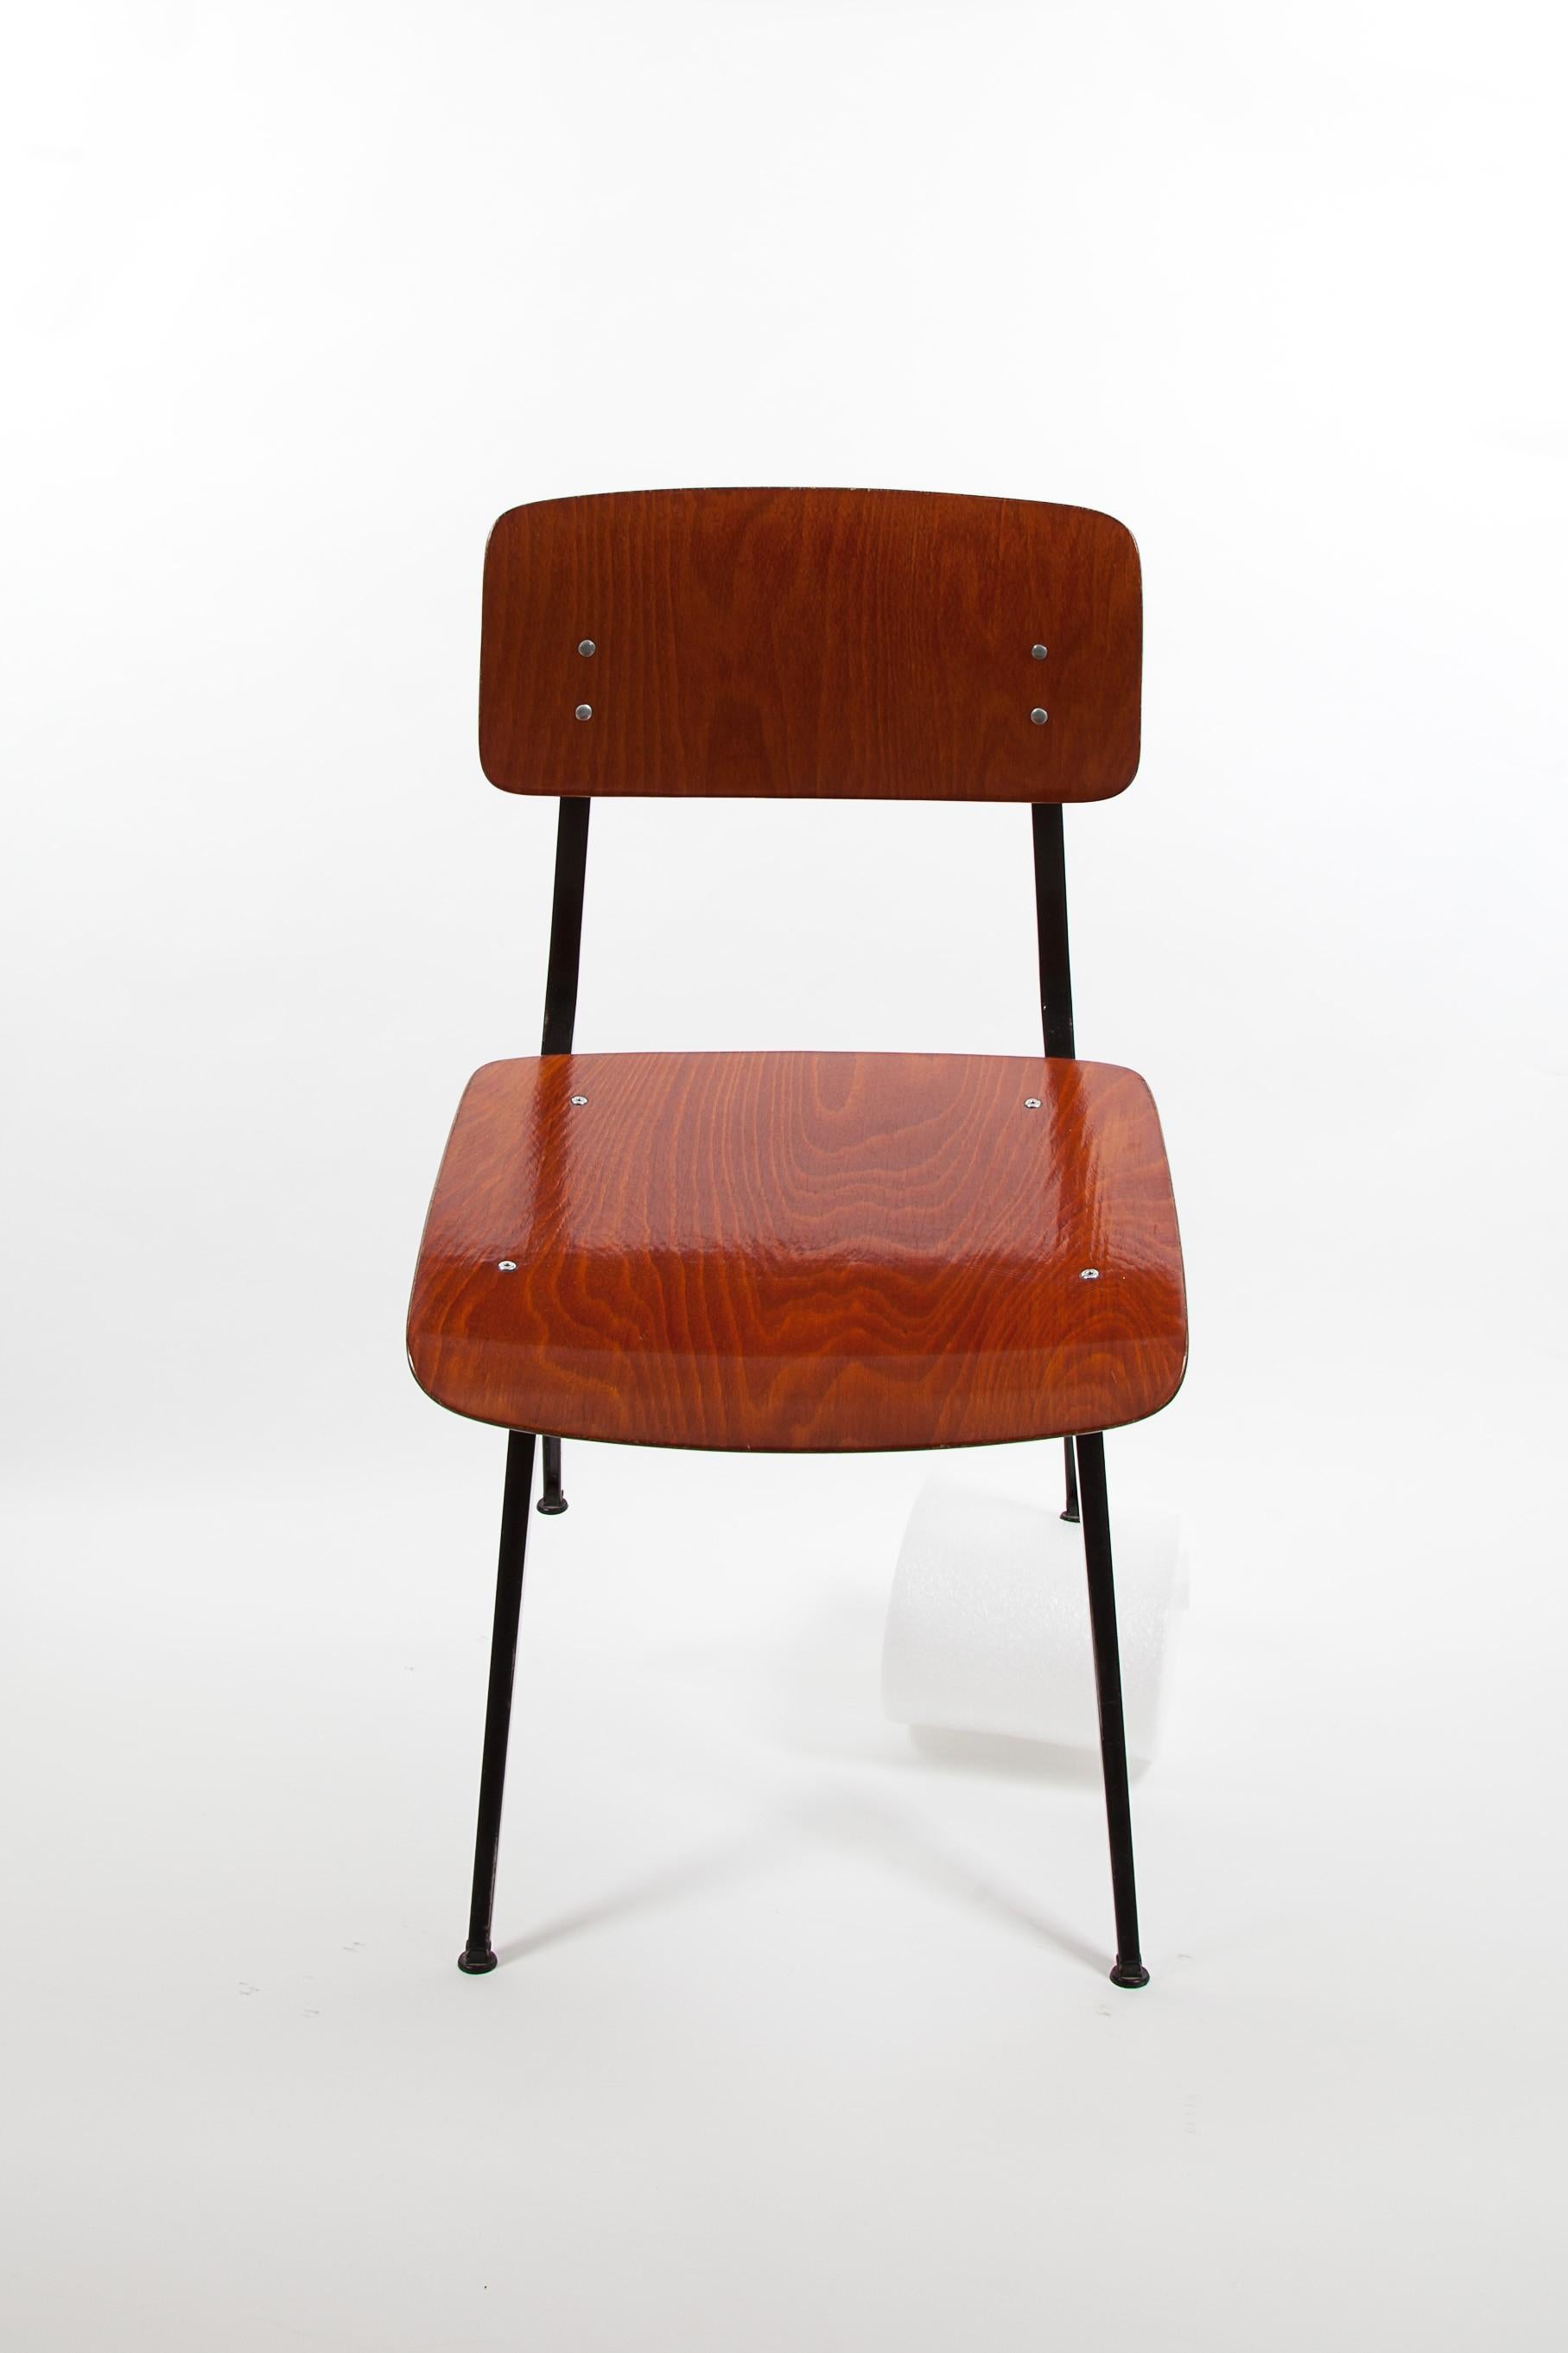 Metal 1 of 32 Dutch Marko Industrial Friso Kramer Design Dining Chairs Compass 1950